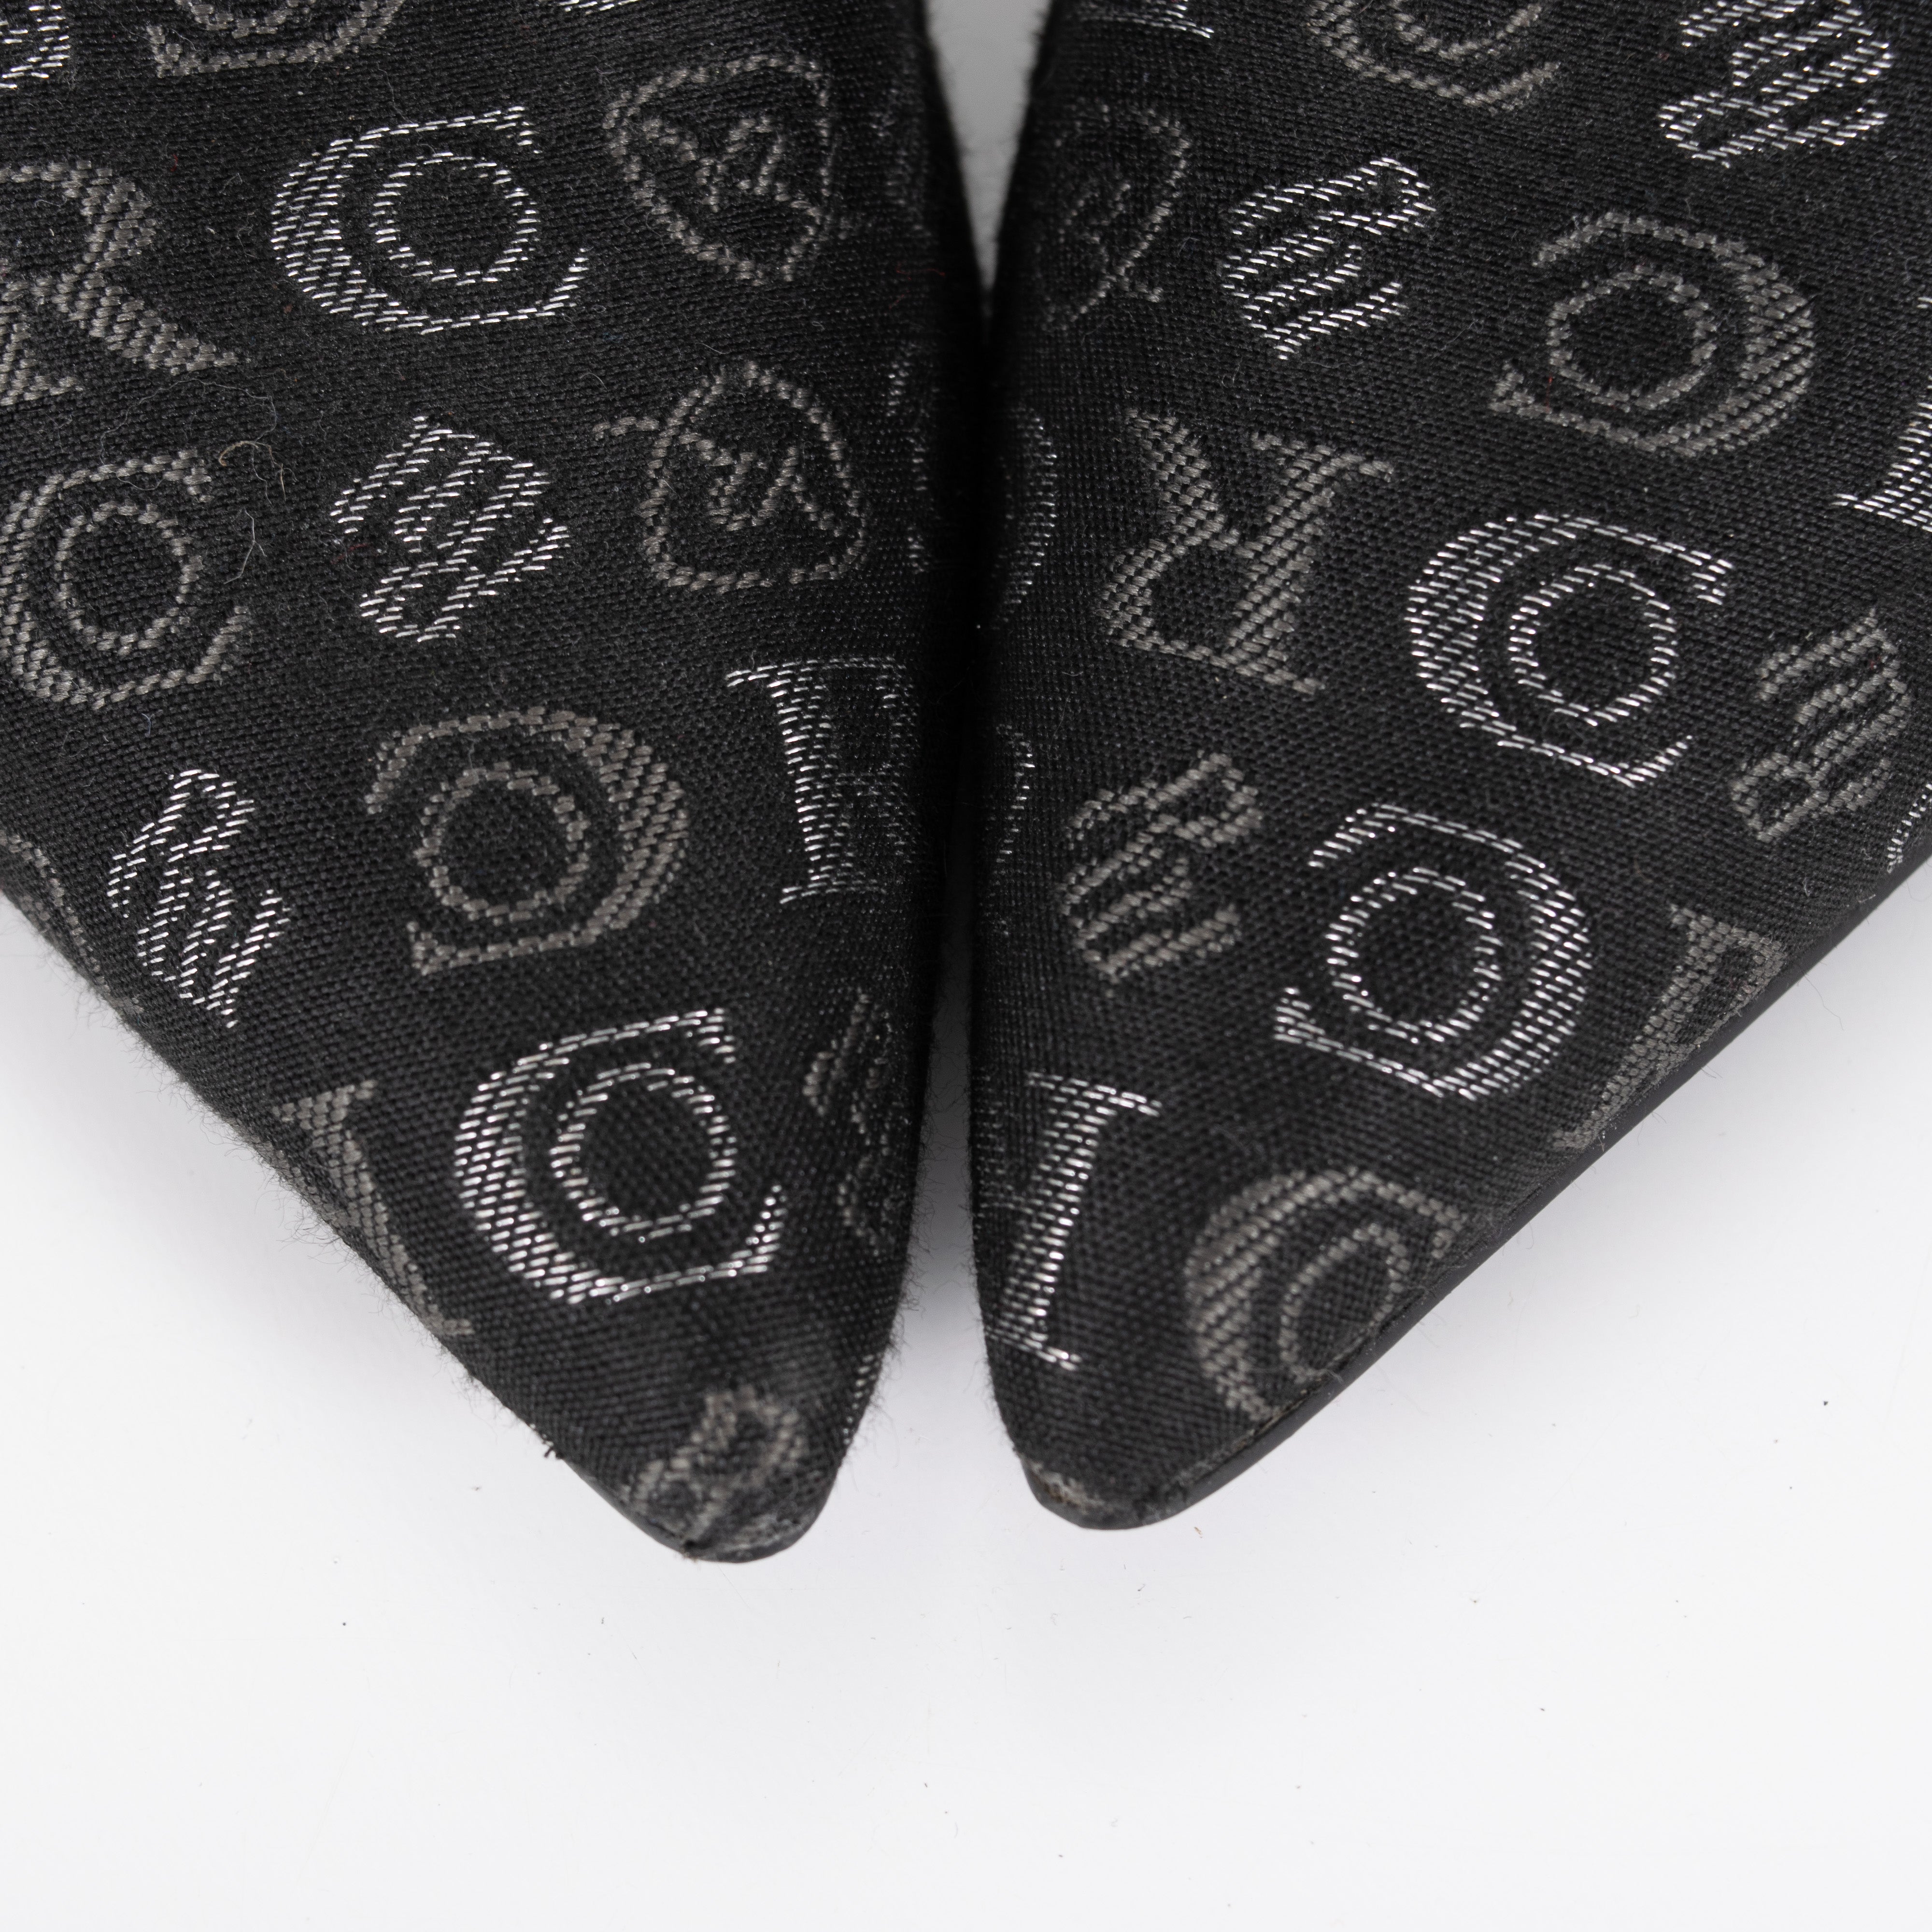 Rocawear All Over Logo Print Chain Detail Black Stiletto Heel Shoes Women's EU41